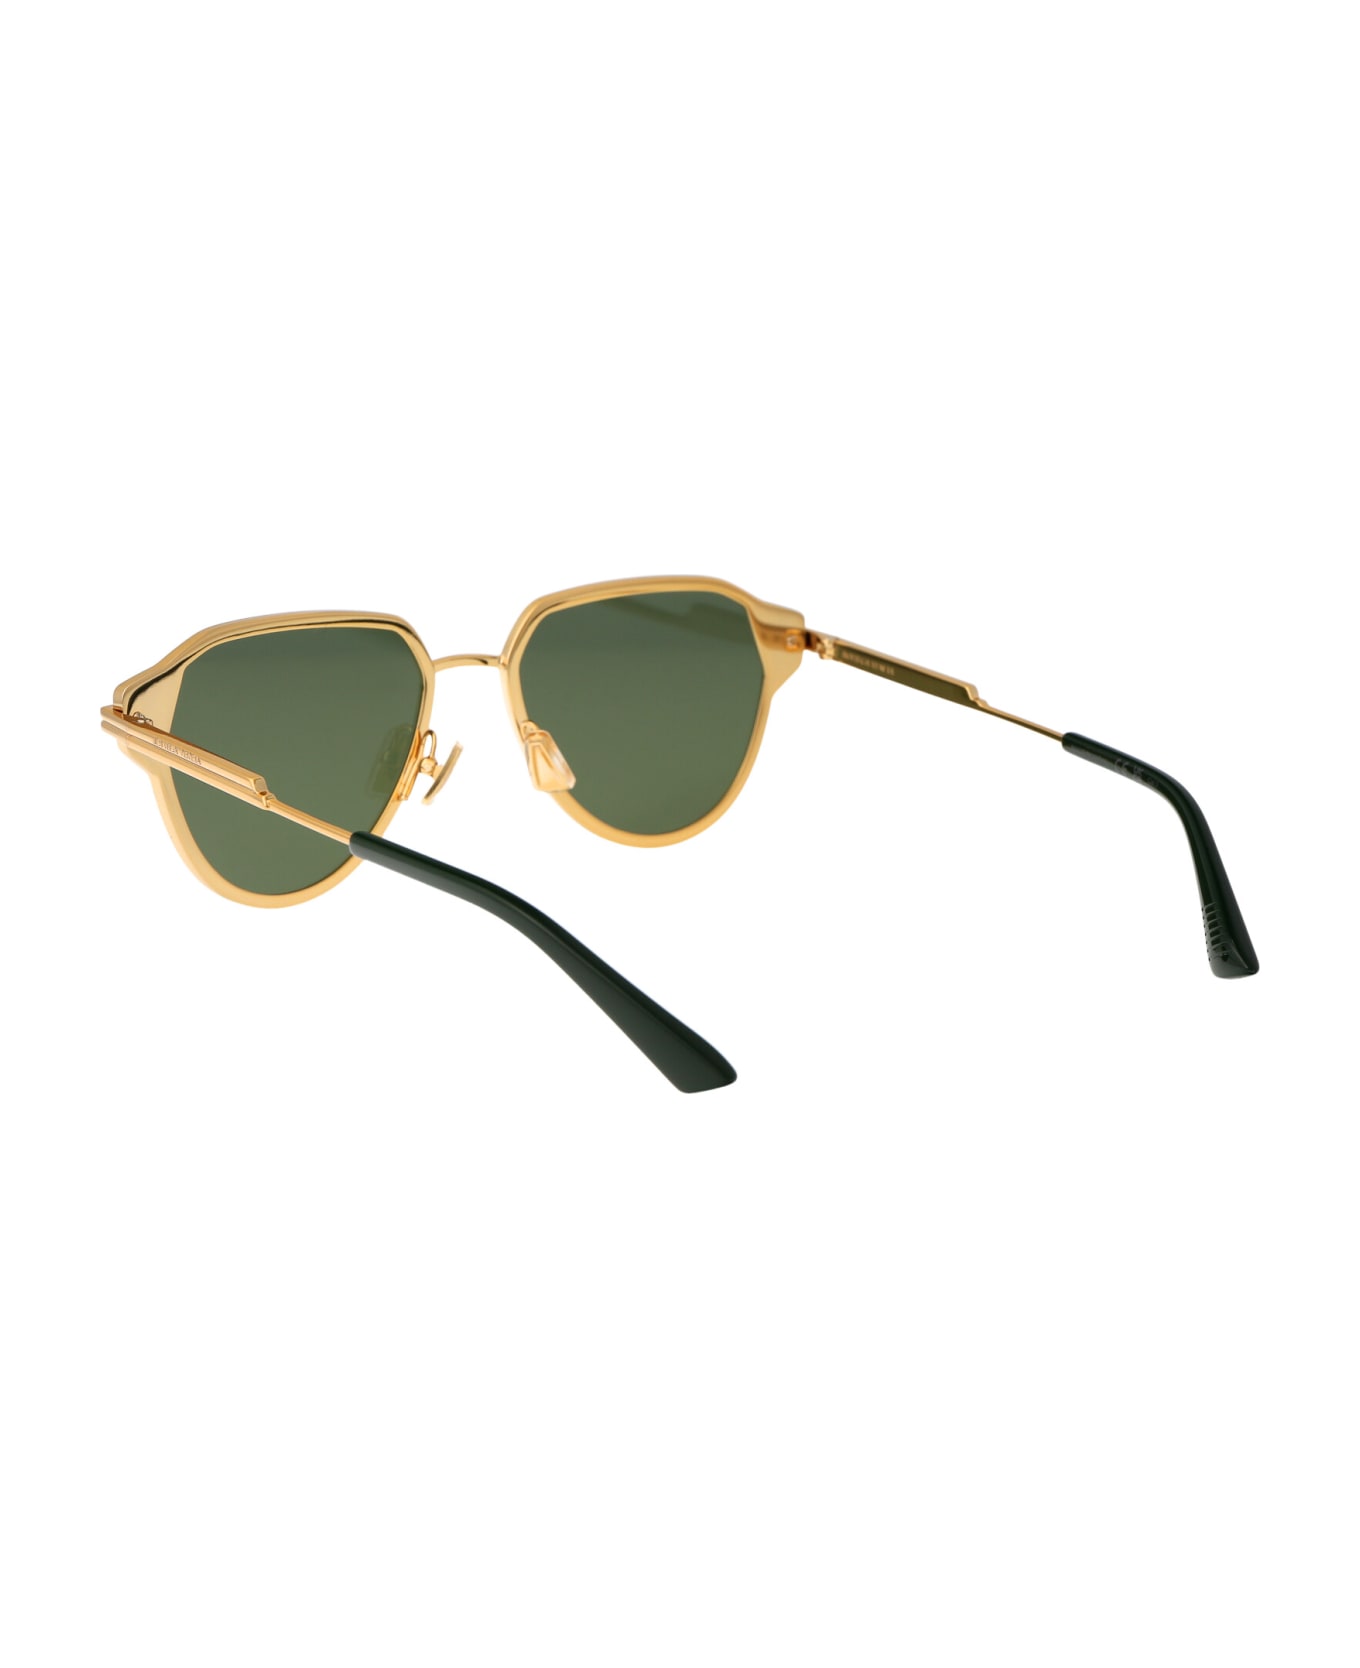 Bottega Veneta Eyewear Bv1271s Sunglasses - 003 GOLD GOLD GREEN サングラス